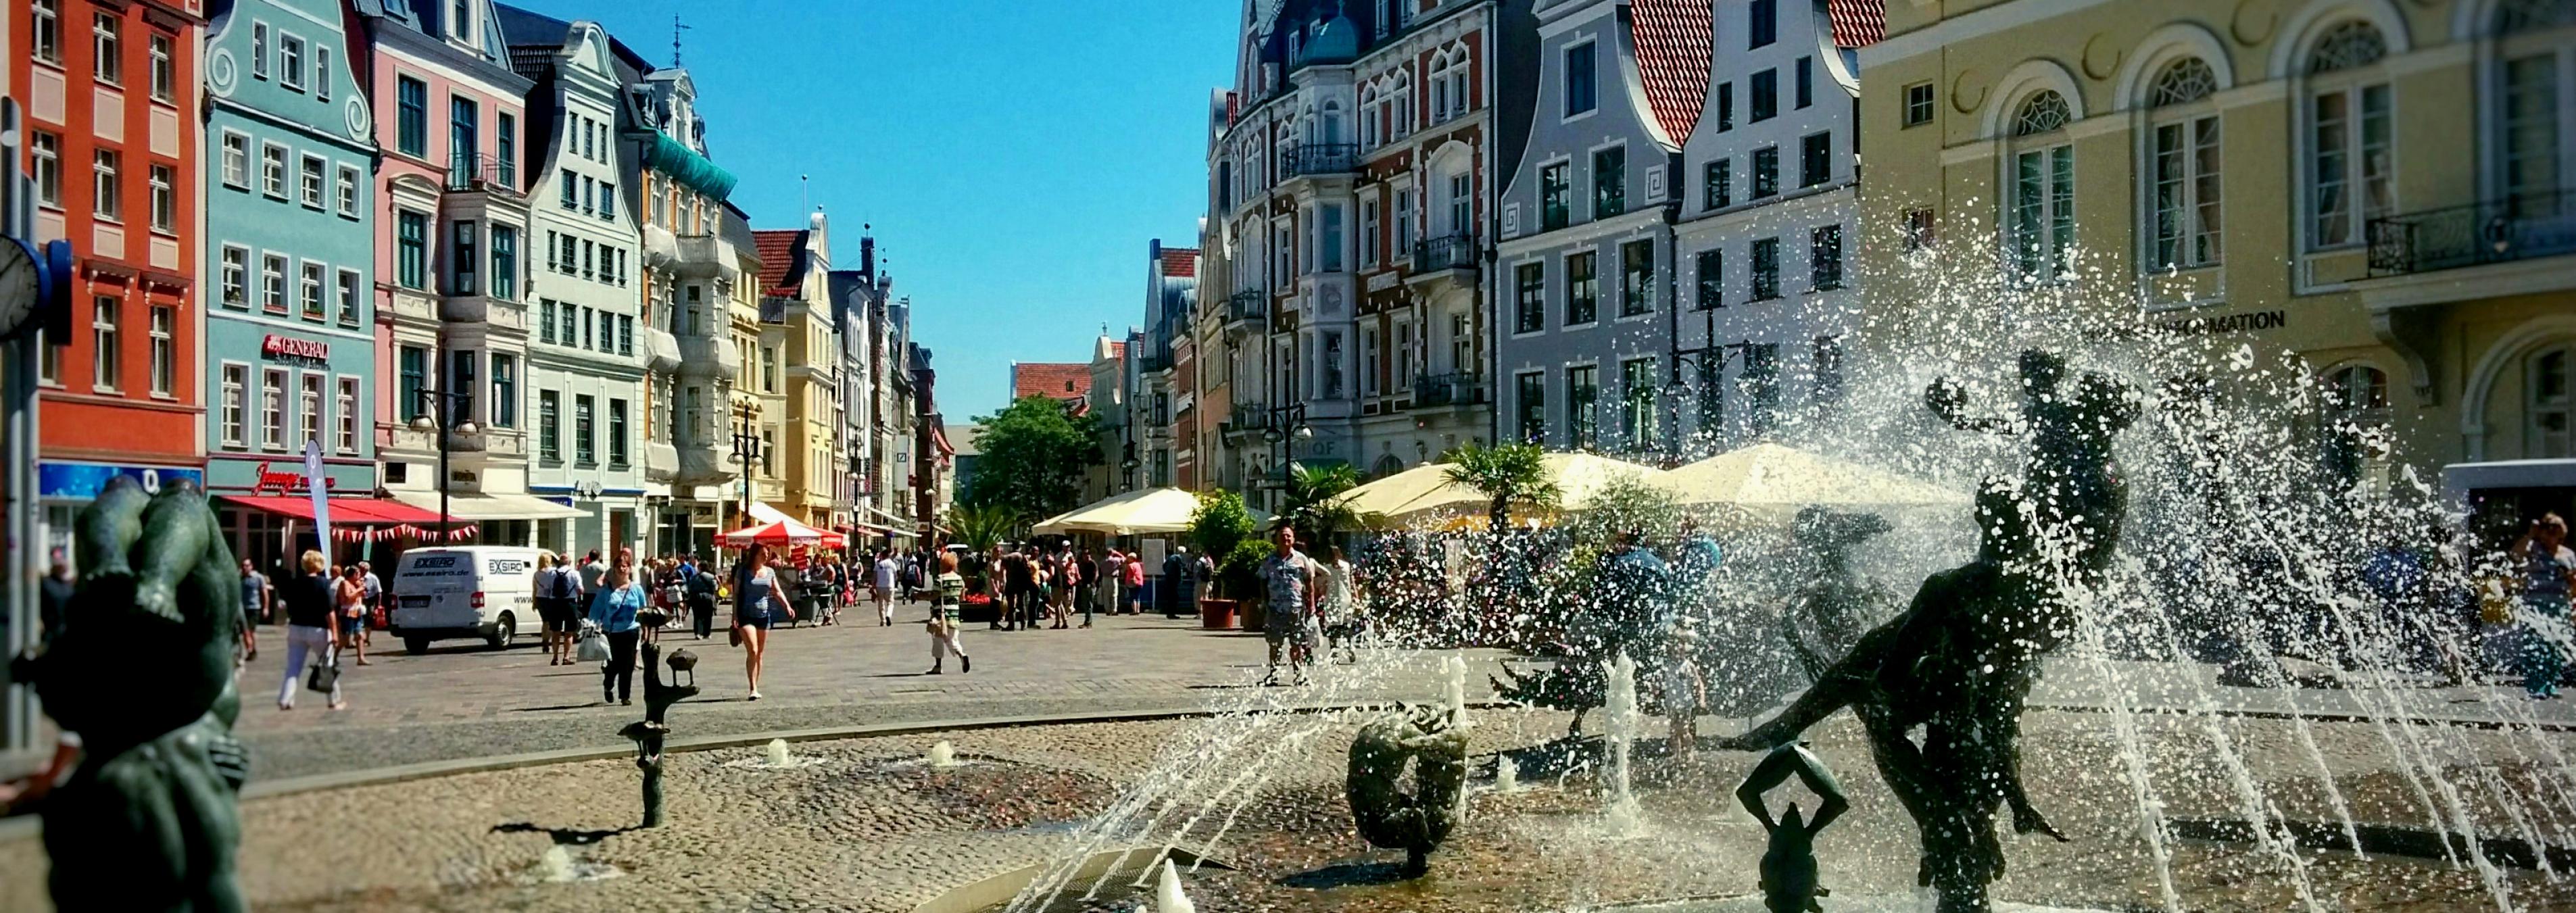 German town square